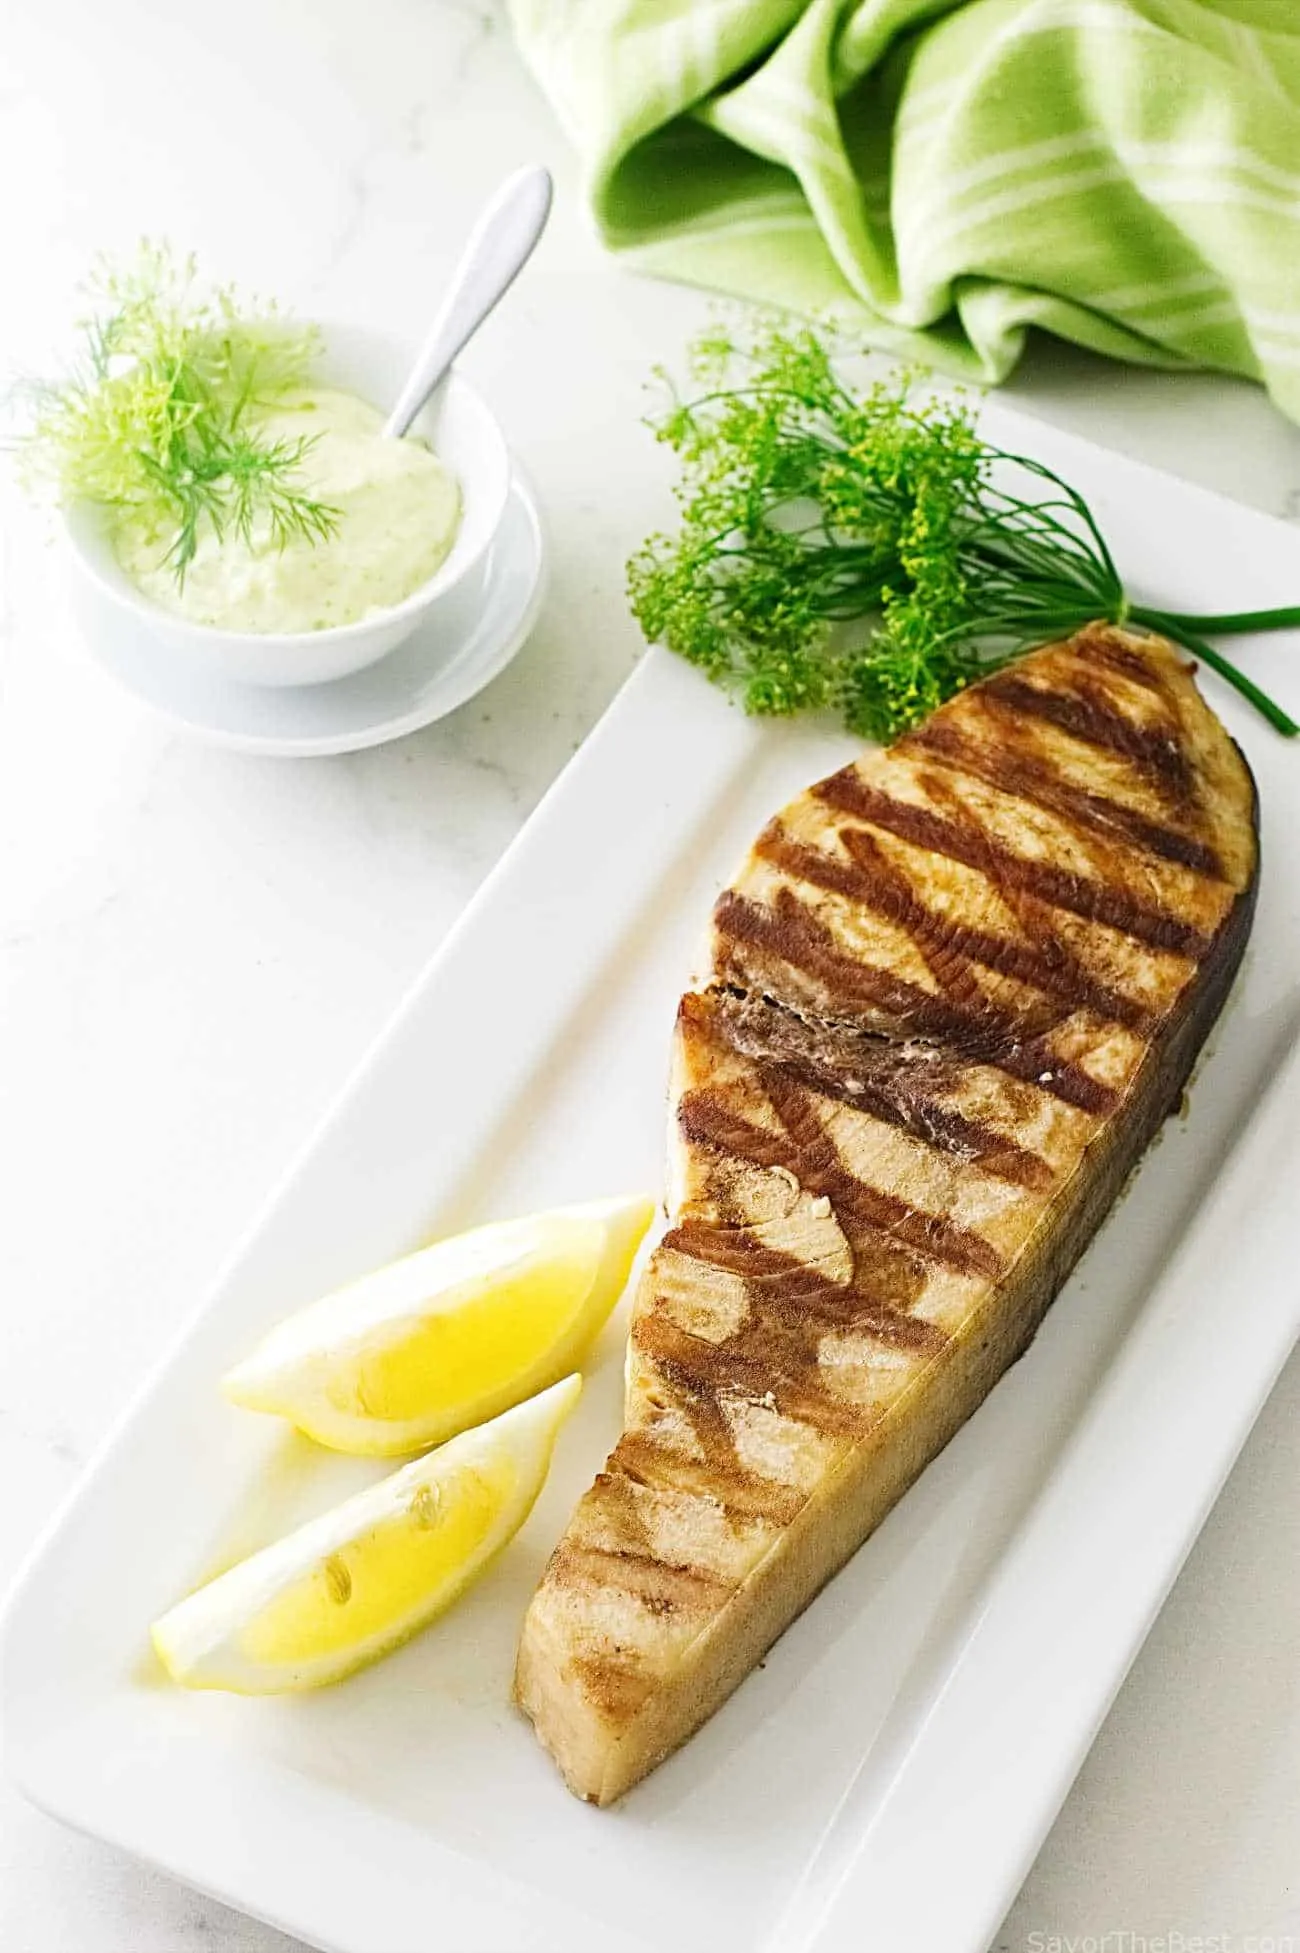 Grilled Swordfish Steak with Lemon-Dill Aioli Sauce.